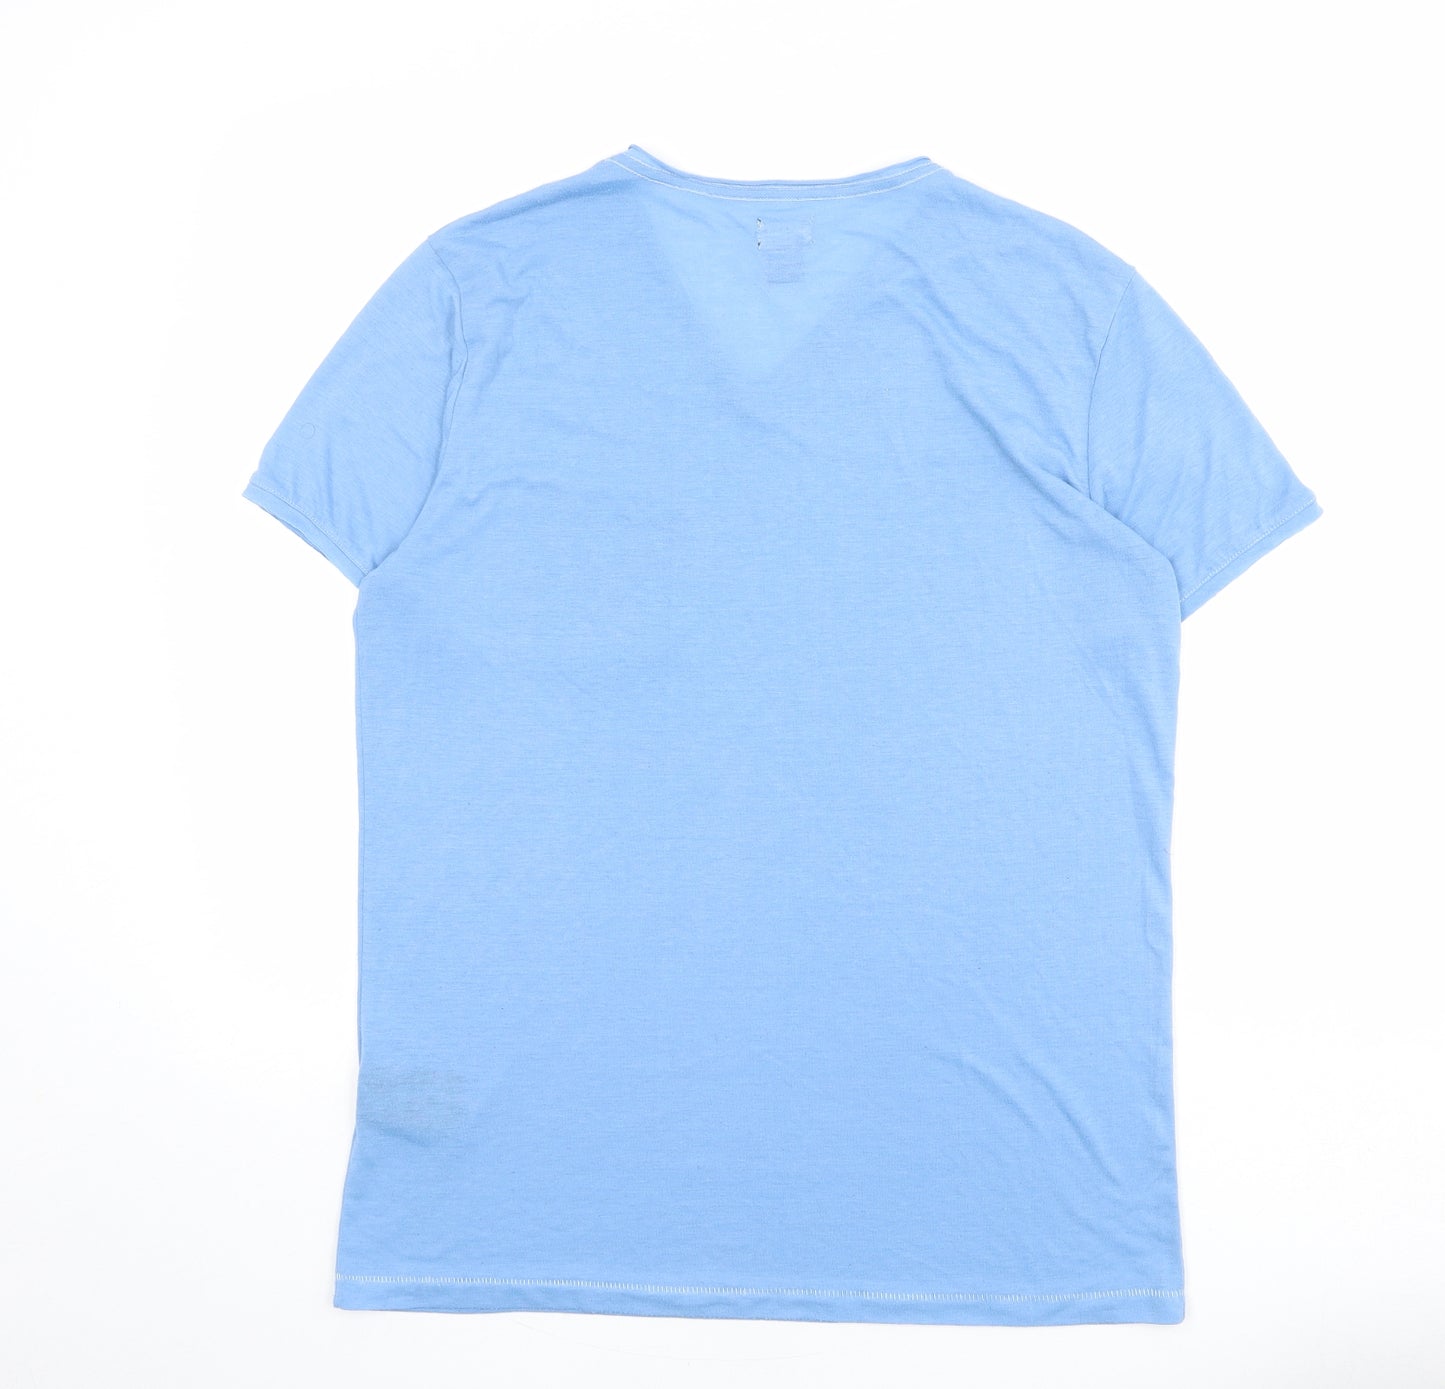 H&M Mens Blue Polyester T-Shirt Size M V-Neck